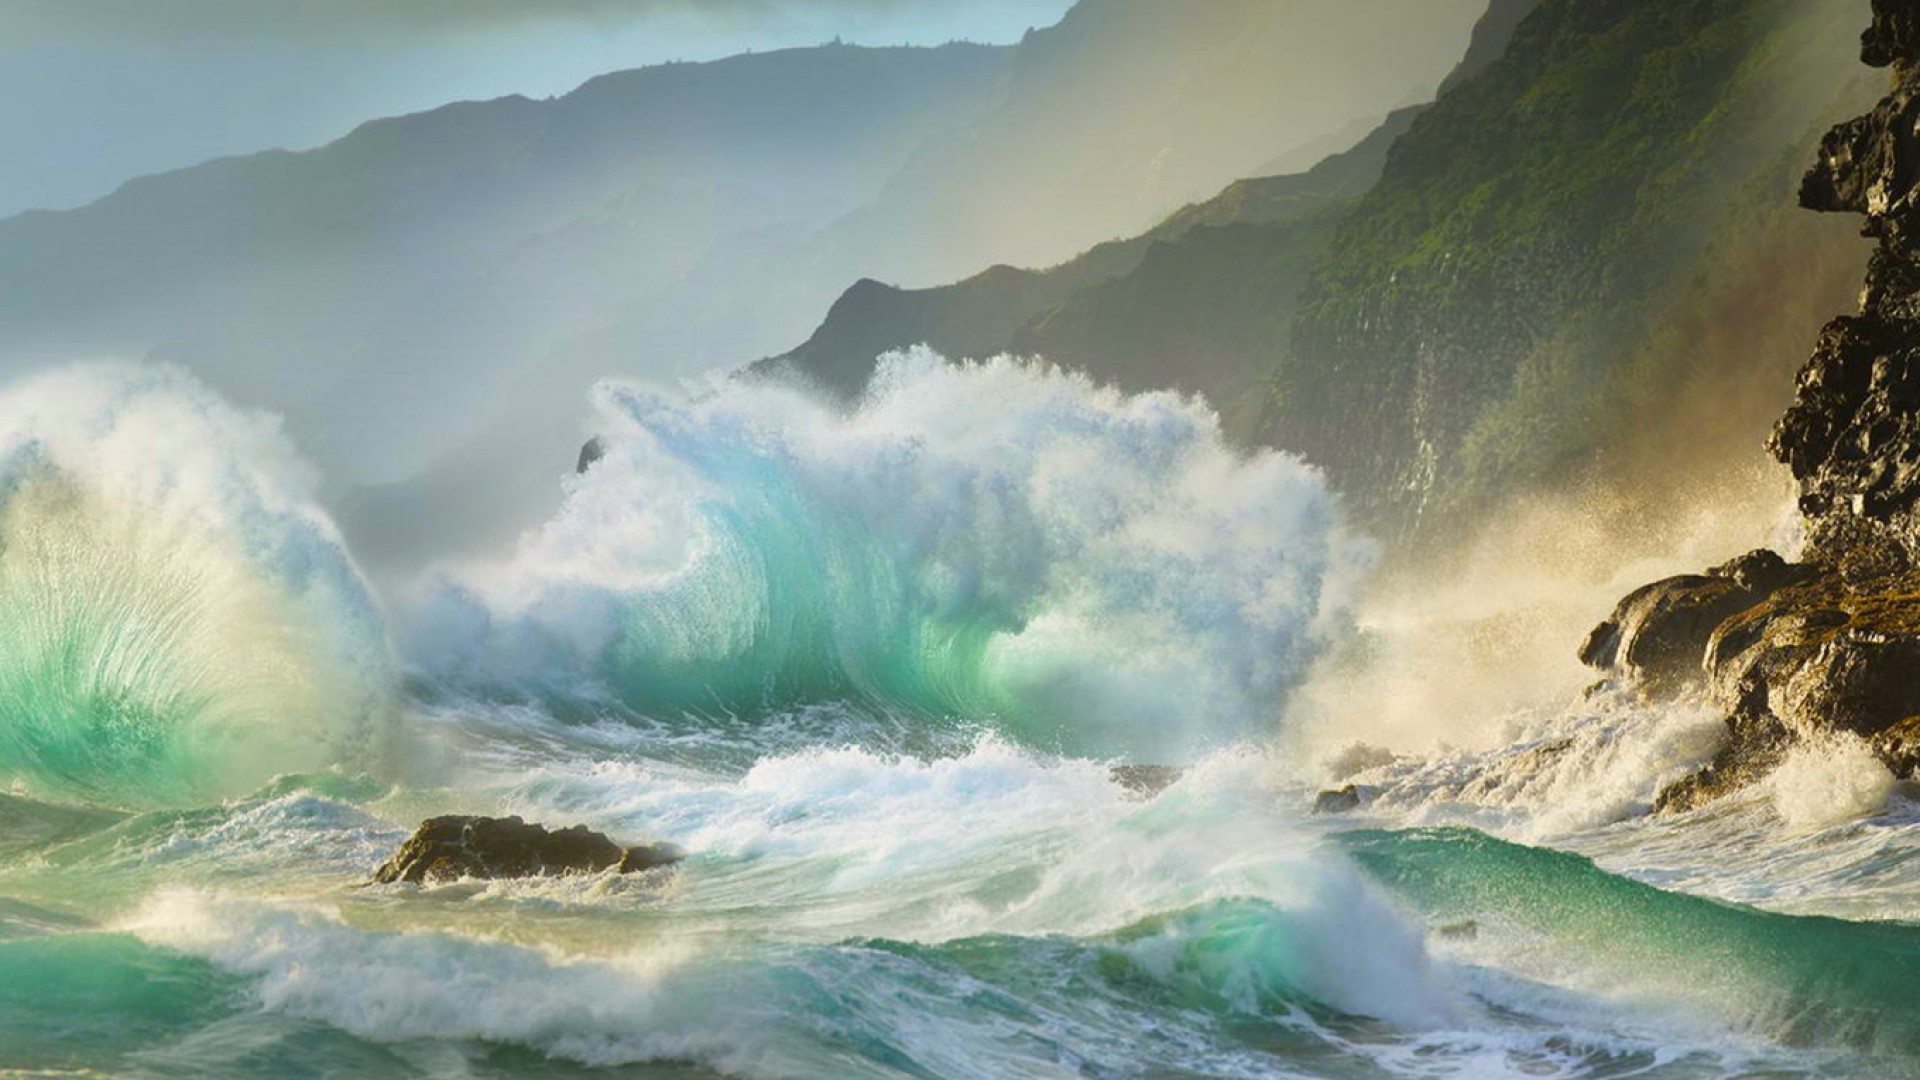 pictures of ocean waves crashing on rocks